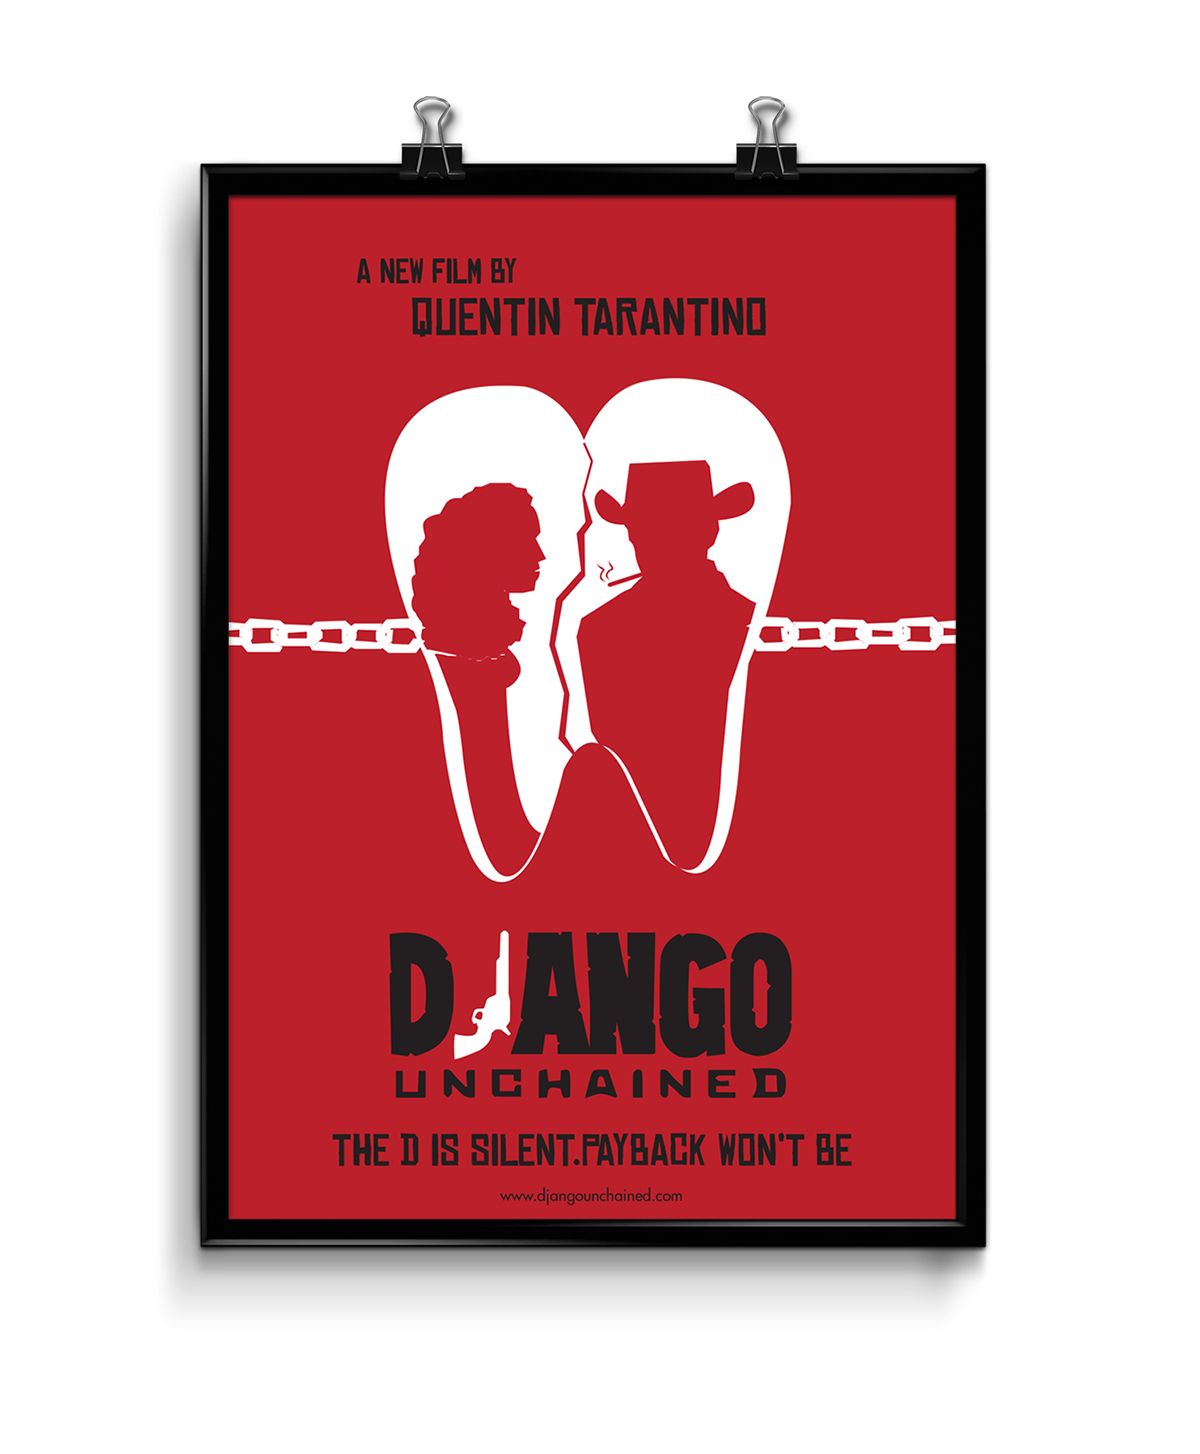 go goa gone Django Unchained zombie Movie Posters illustrator raw Illustrator